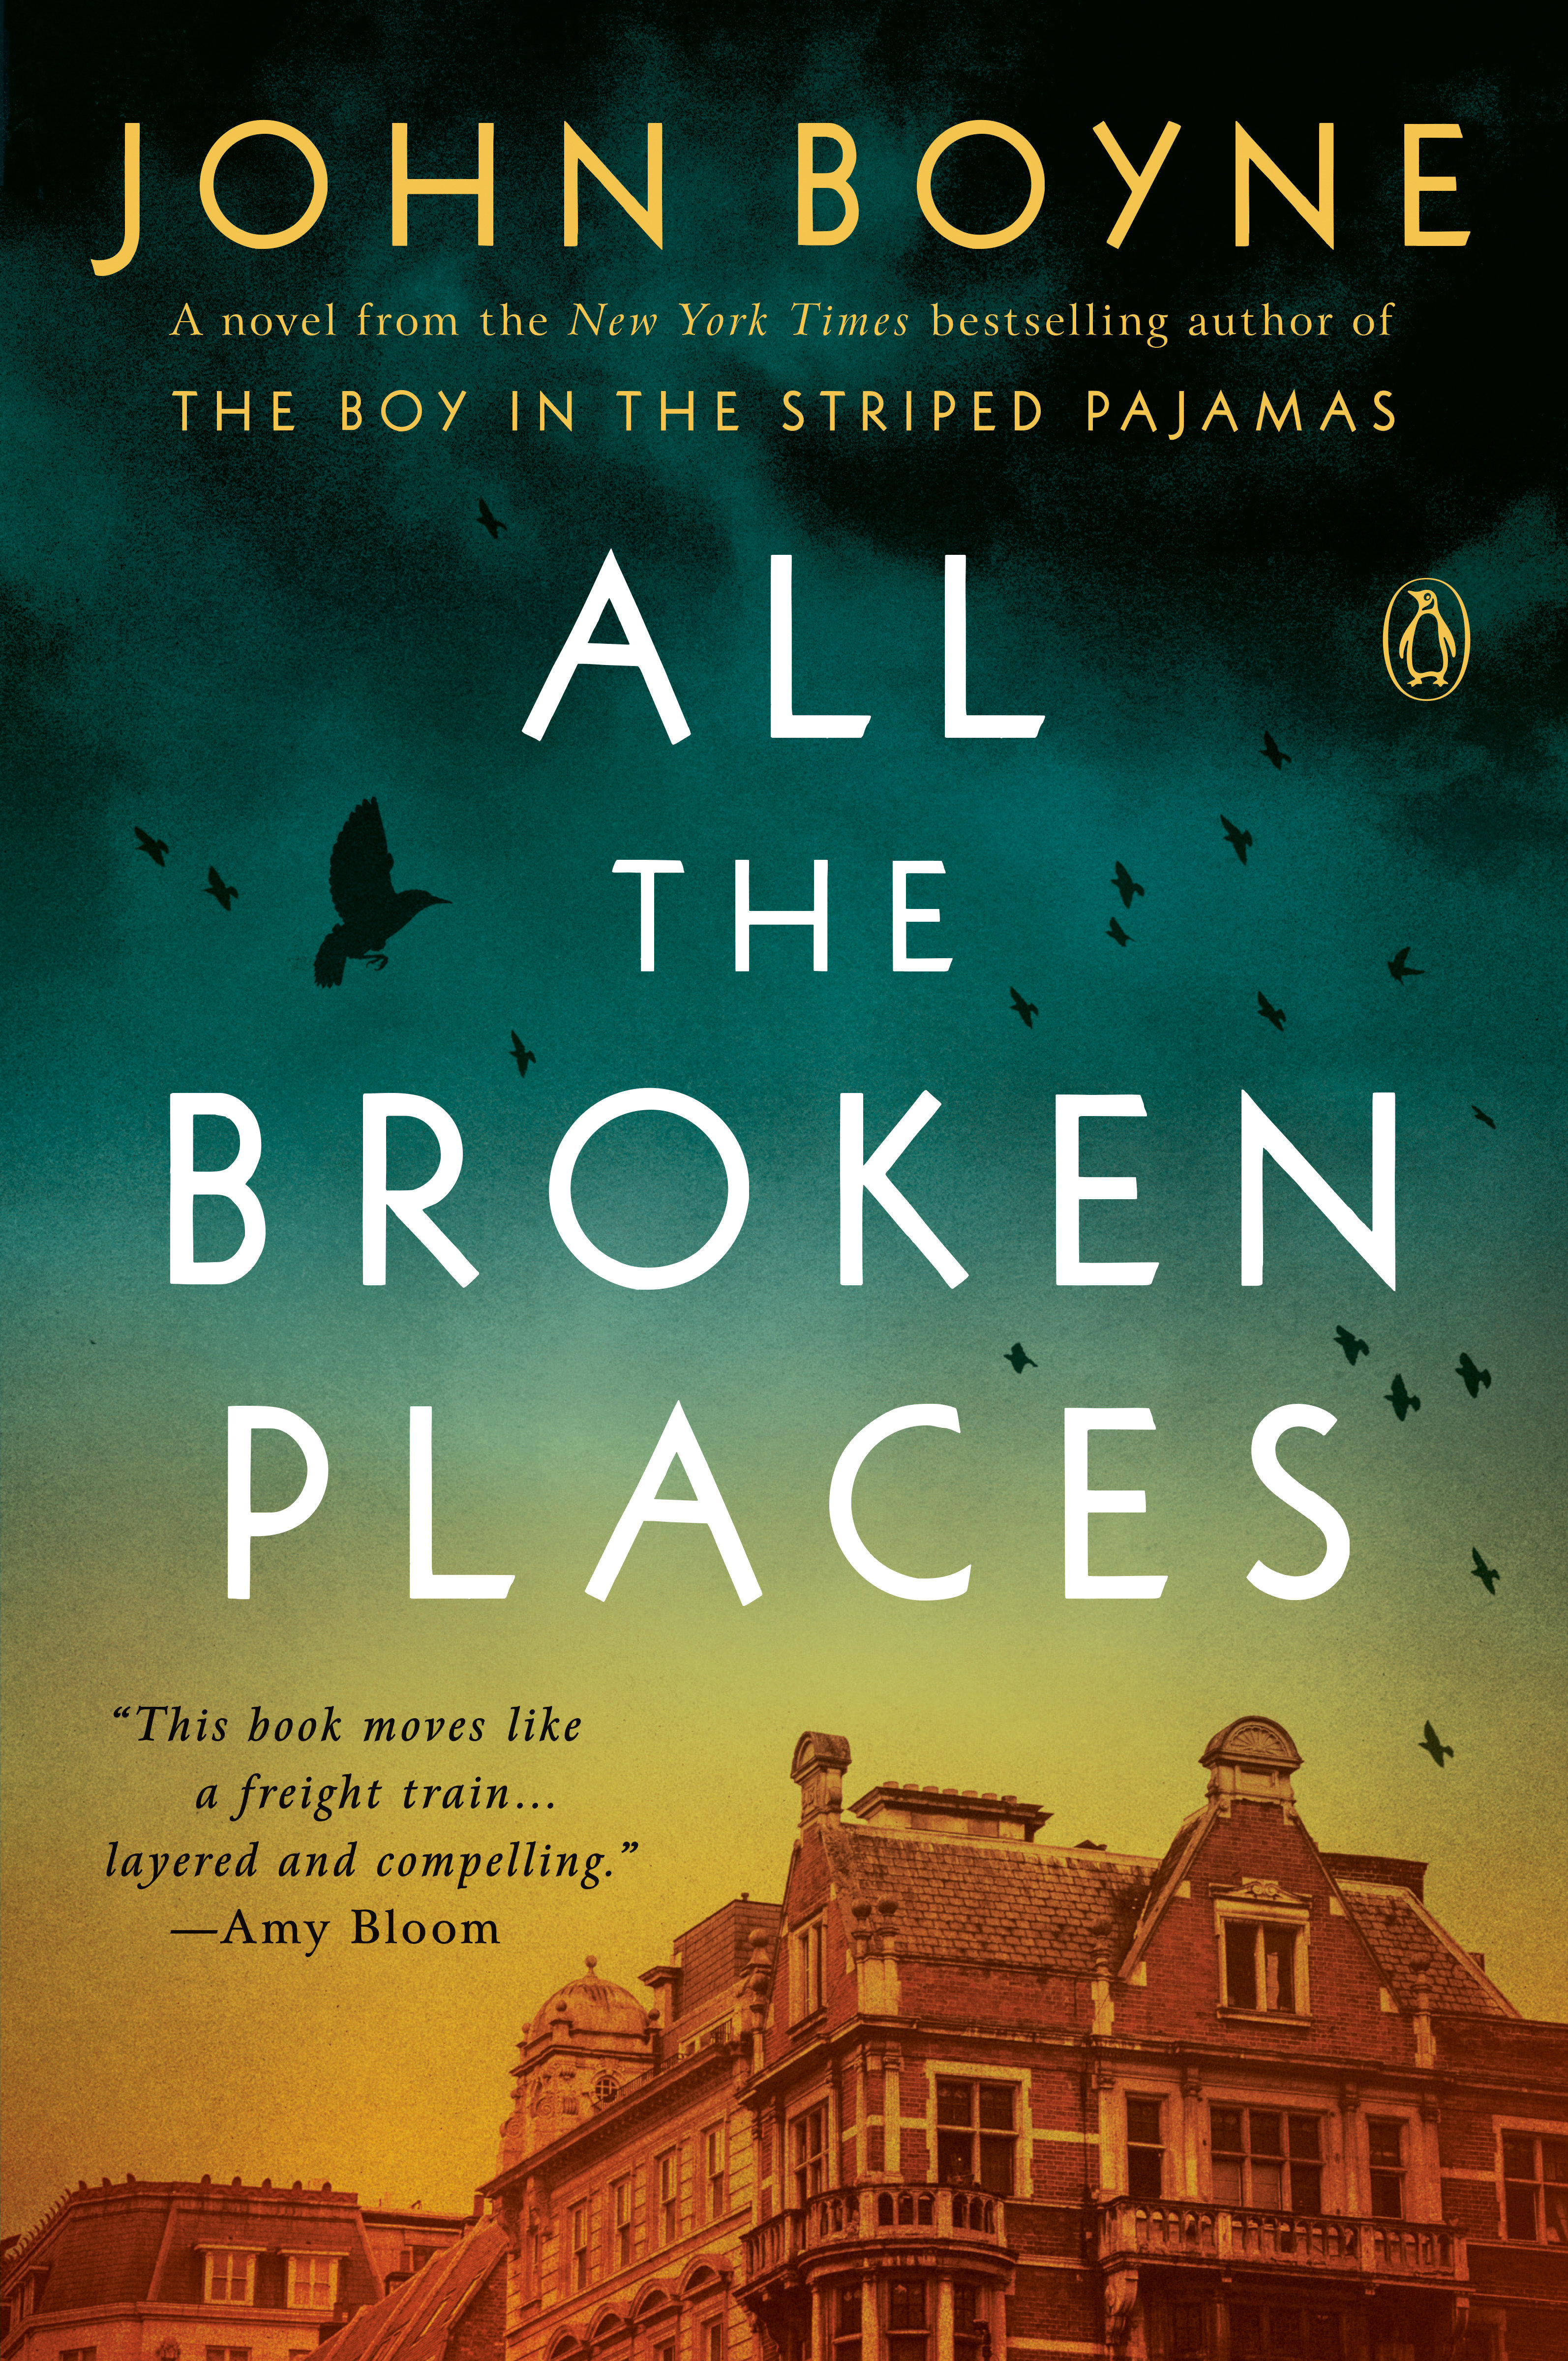 All the Broken Places A Novel